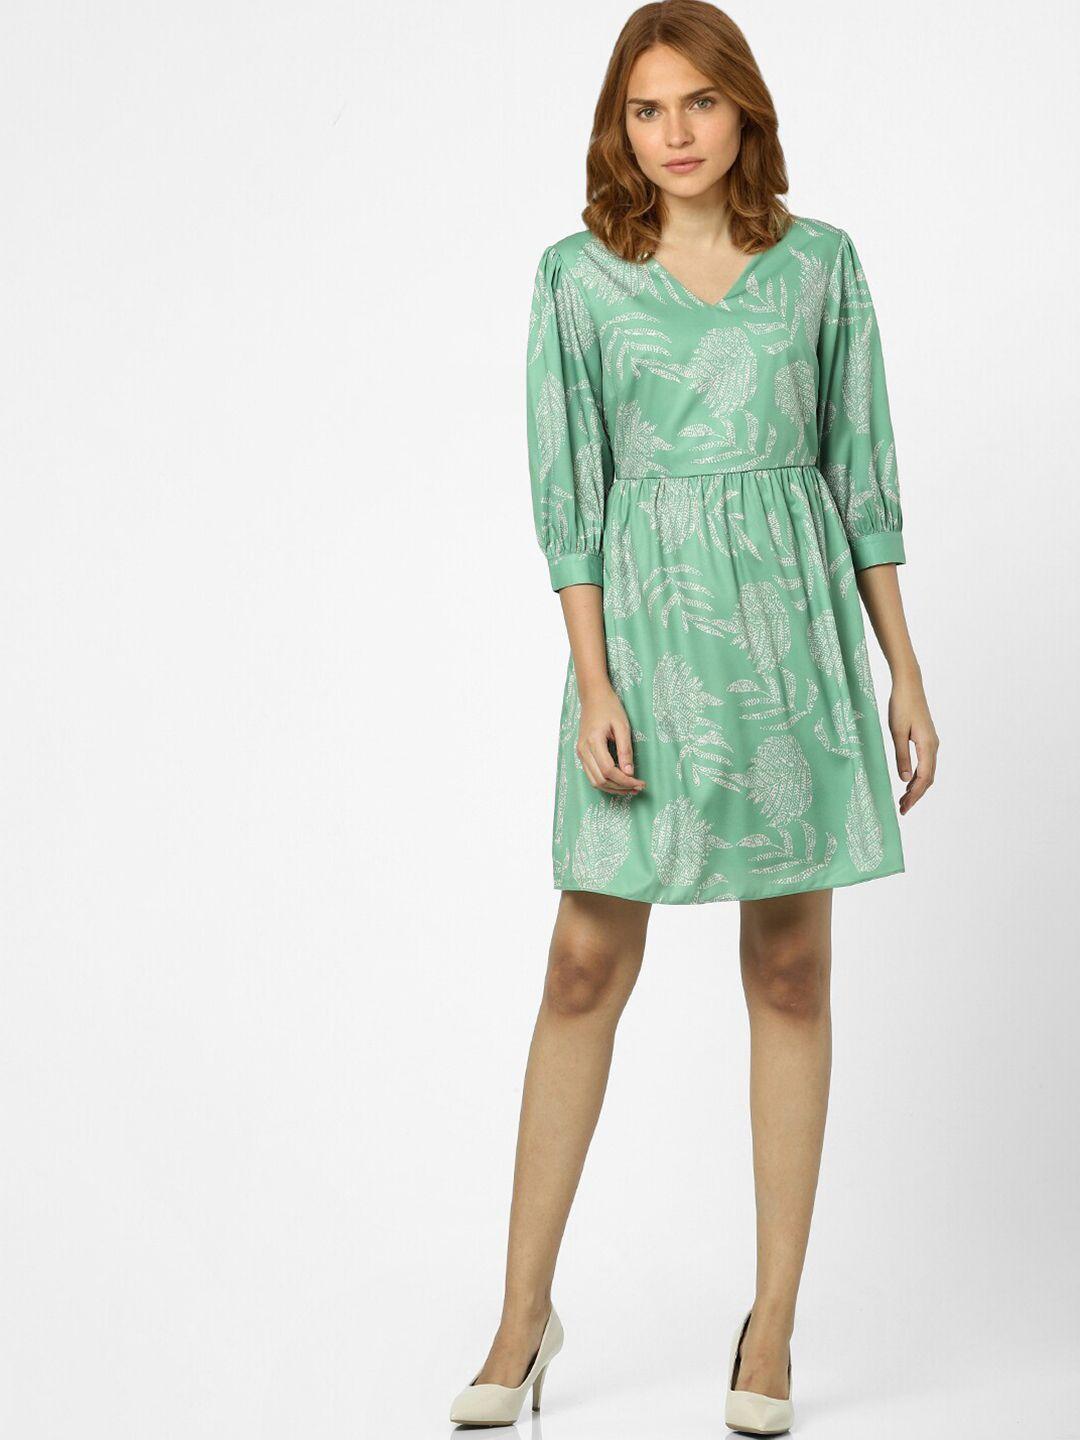 vero moda green tropical print fit & flare dress